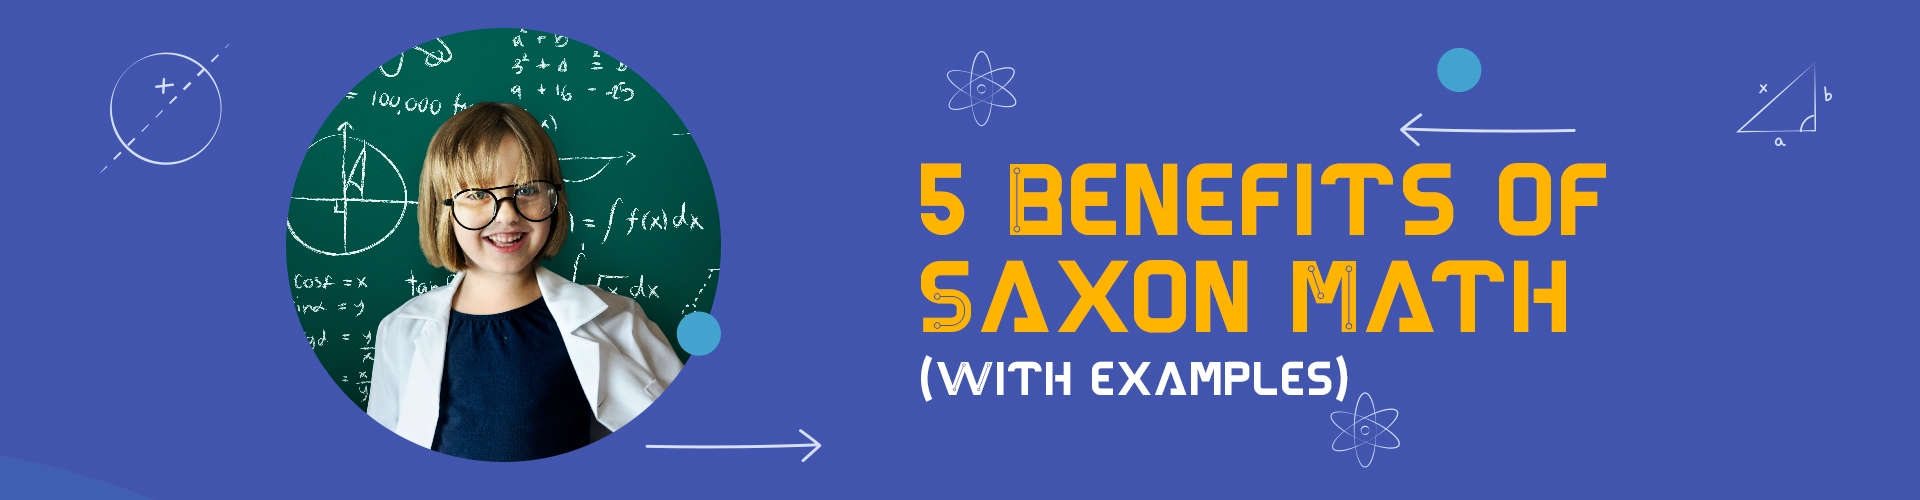 Benefits of Saxon Math